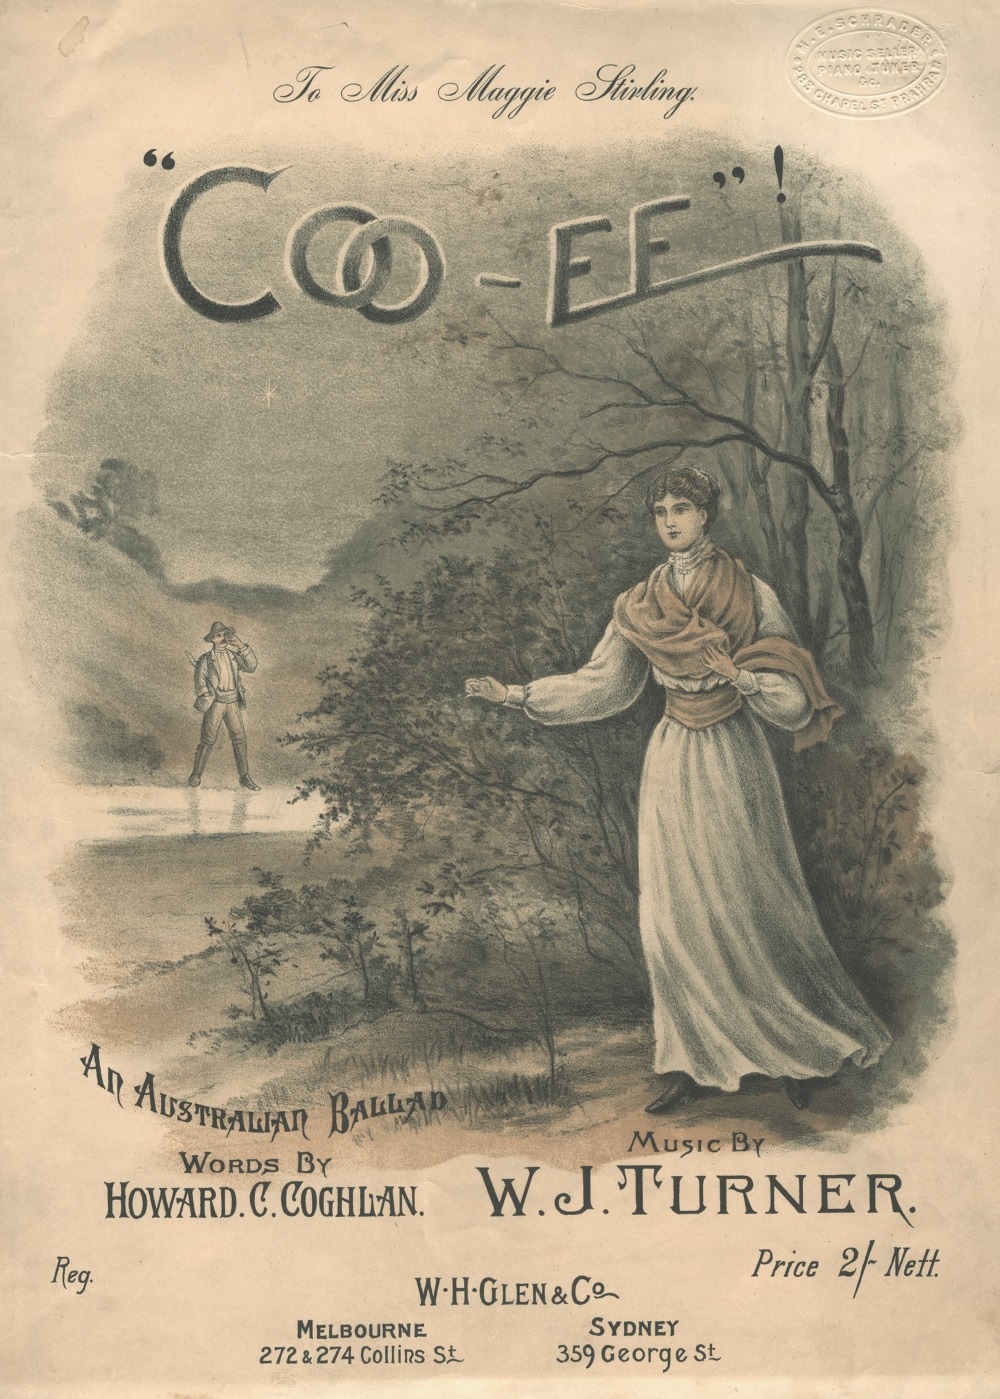 Coo-ee by W. J. Turner